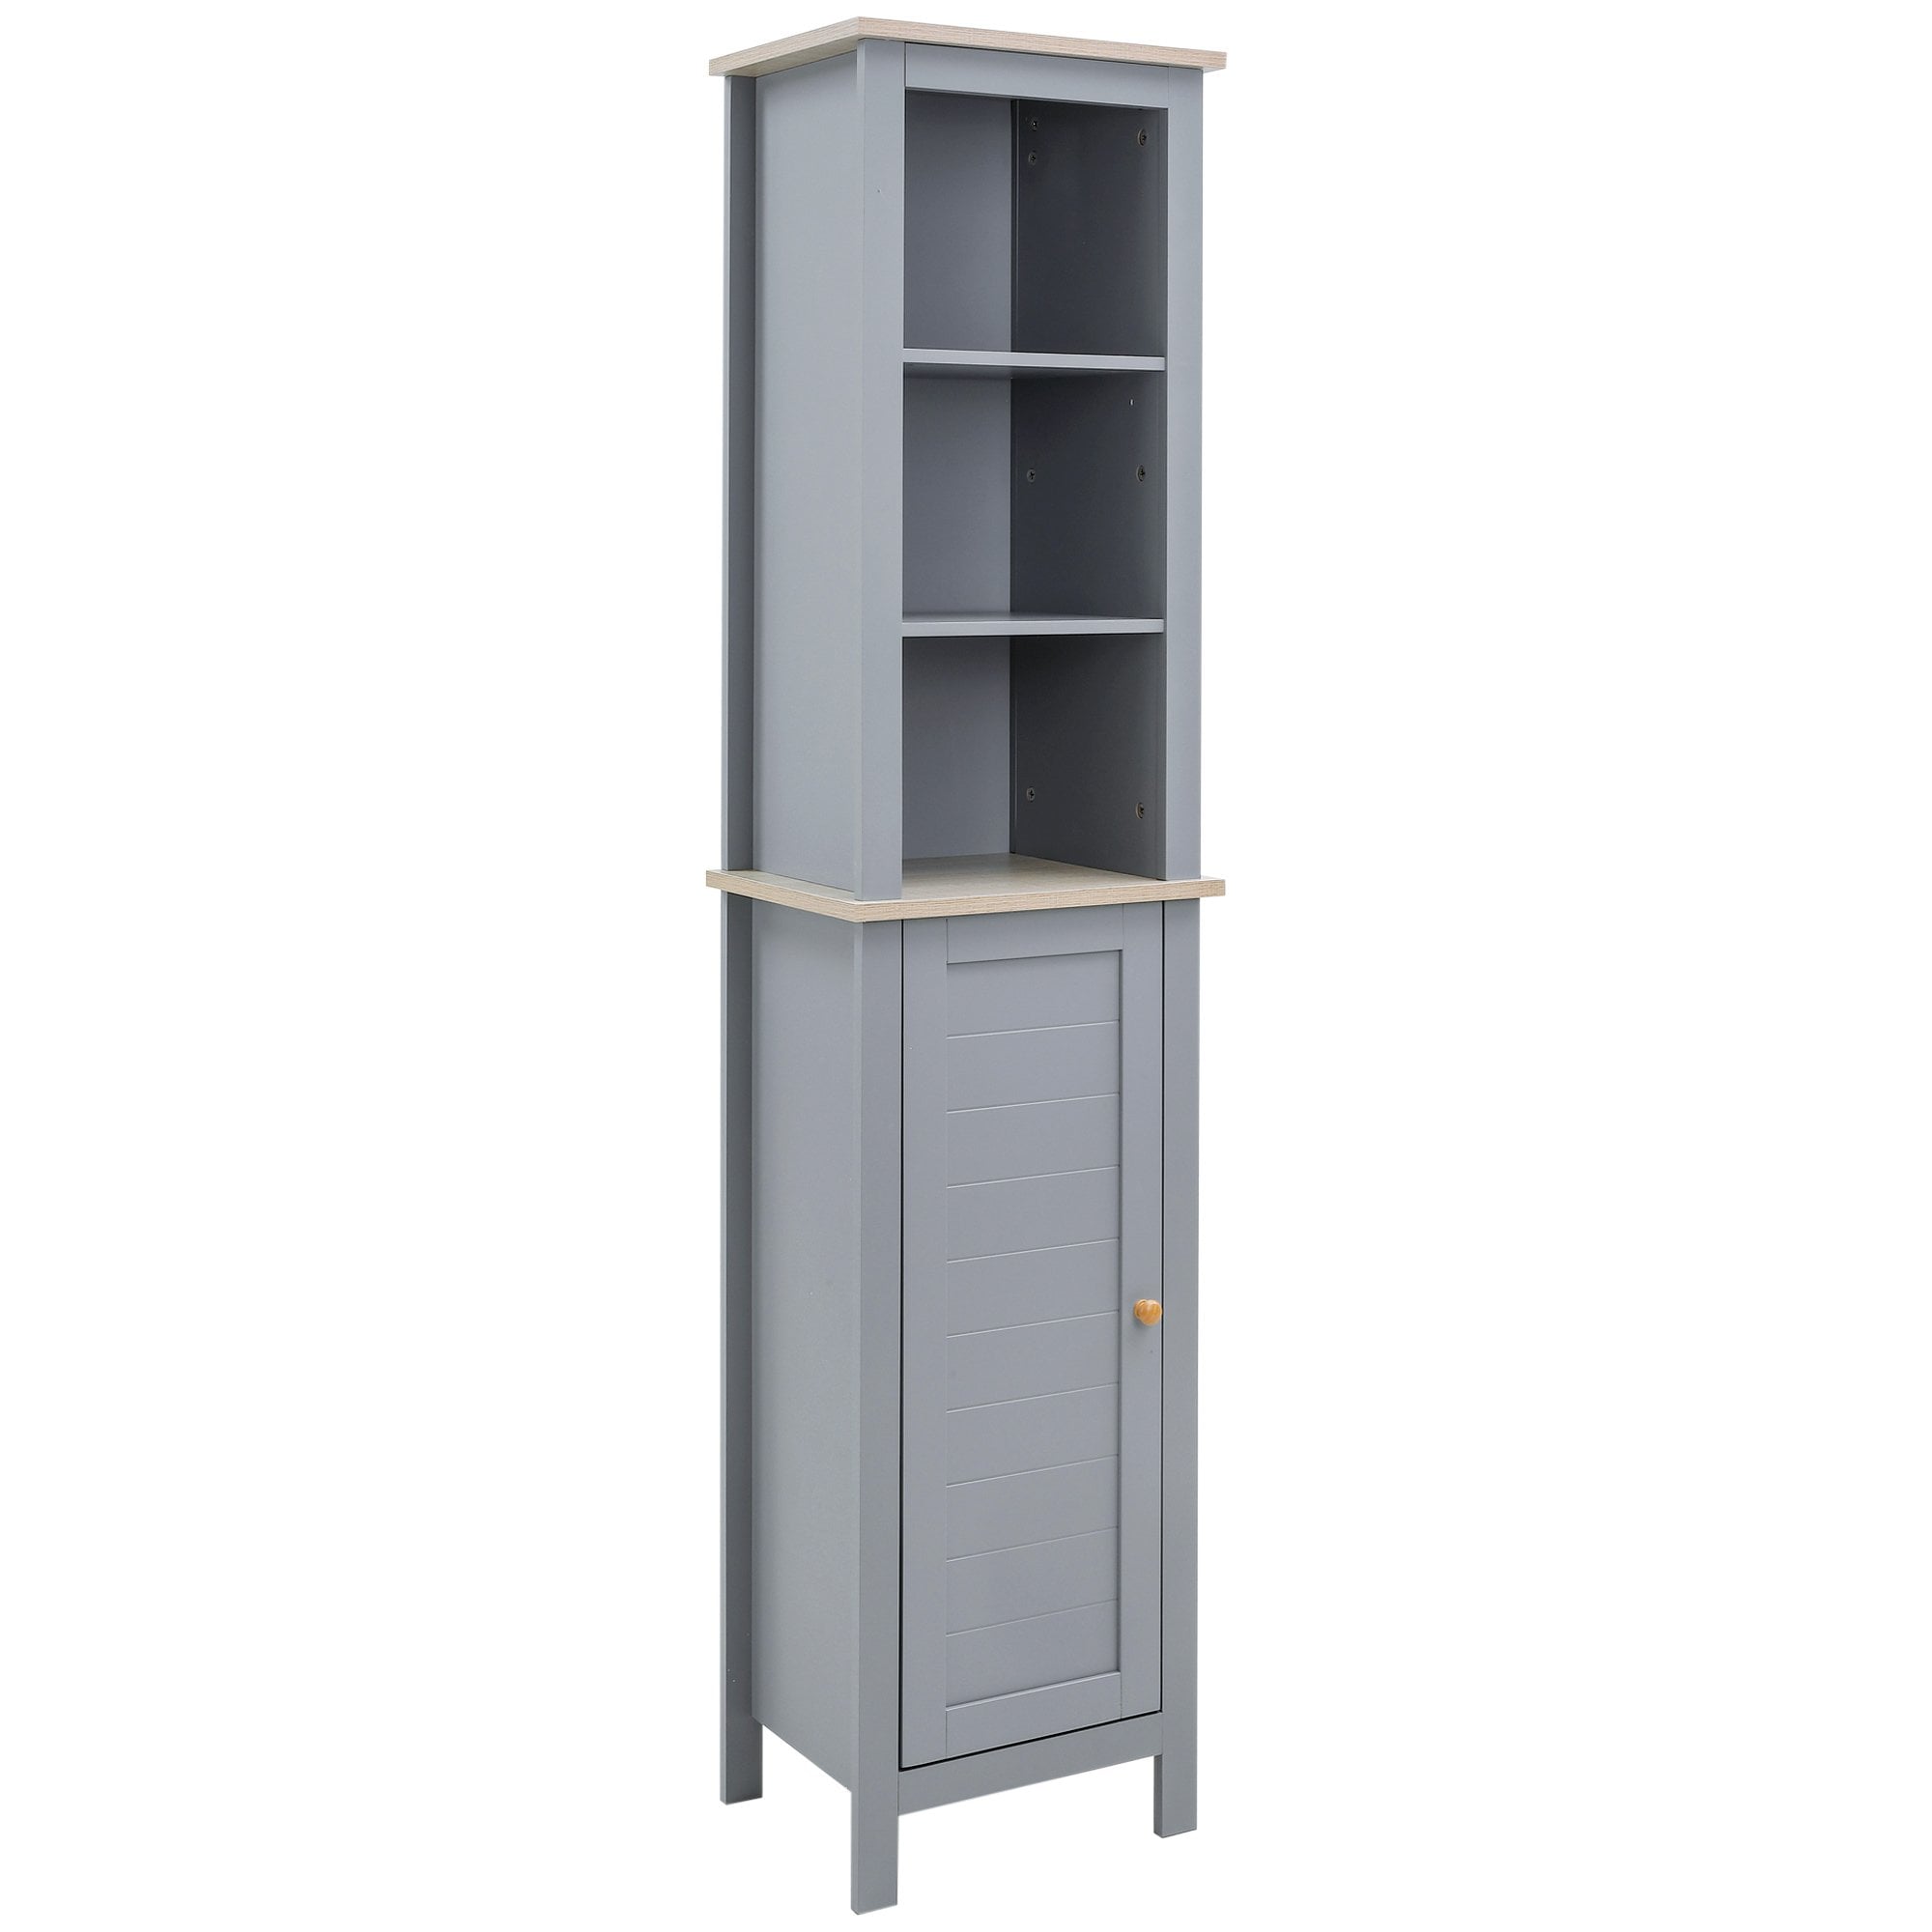 kleankin Bathroom Floor Storage Cabinet with 3 Tier Shelf and Cupboard with Door - Free Standing Linen Tower - Tall Slim Side Organizer Shelves - Grey